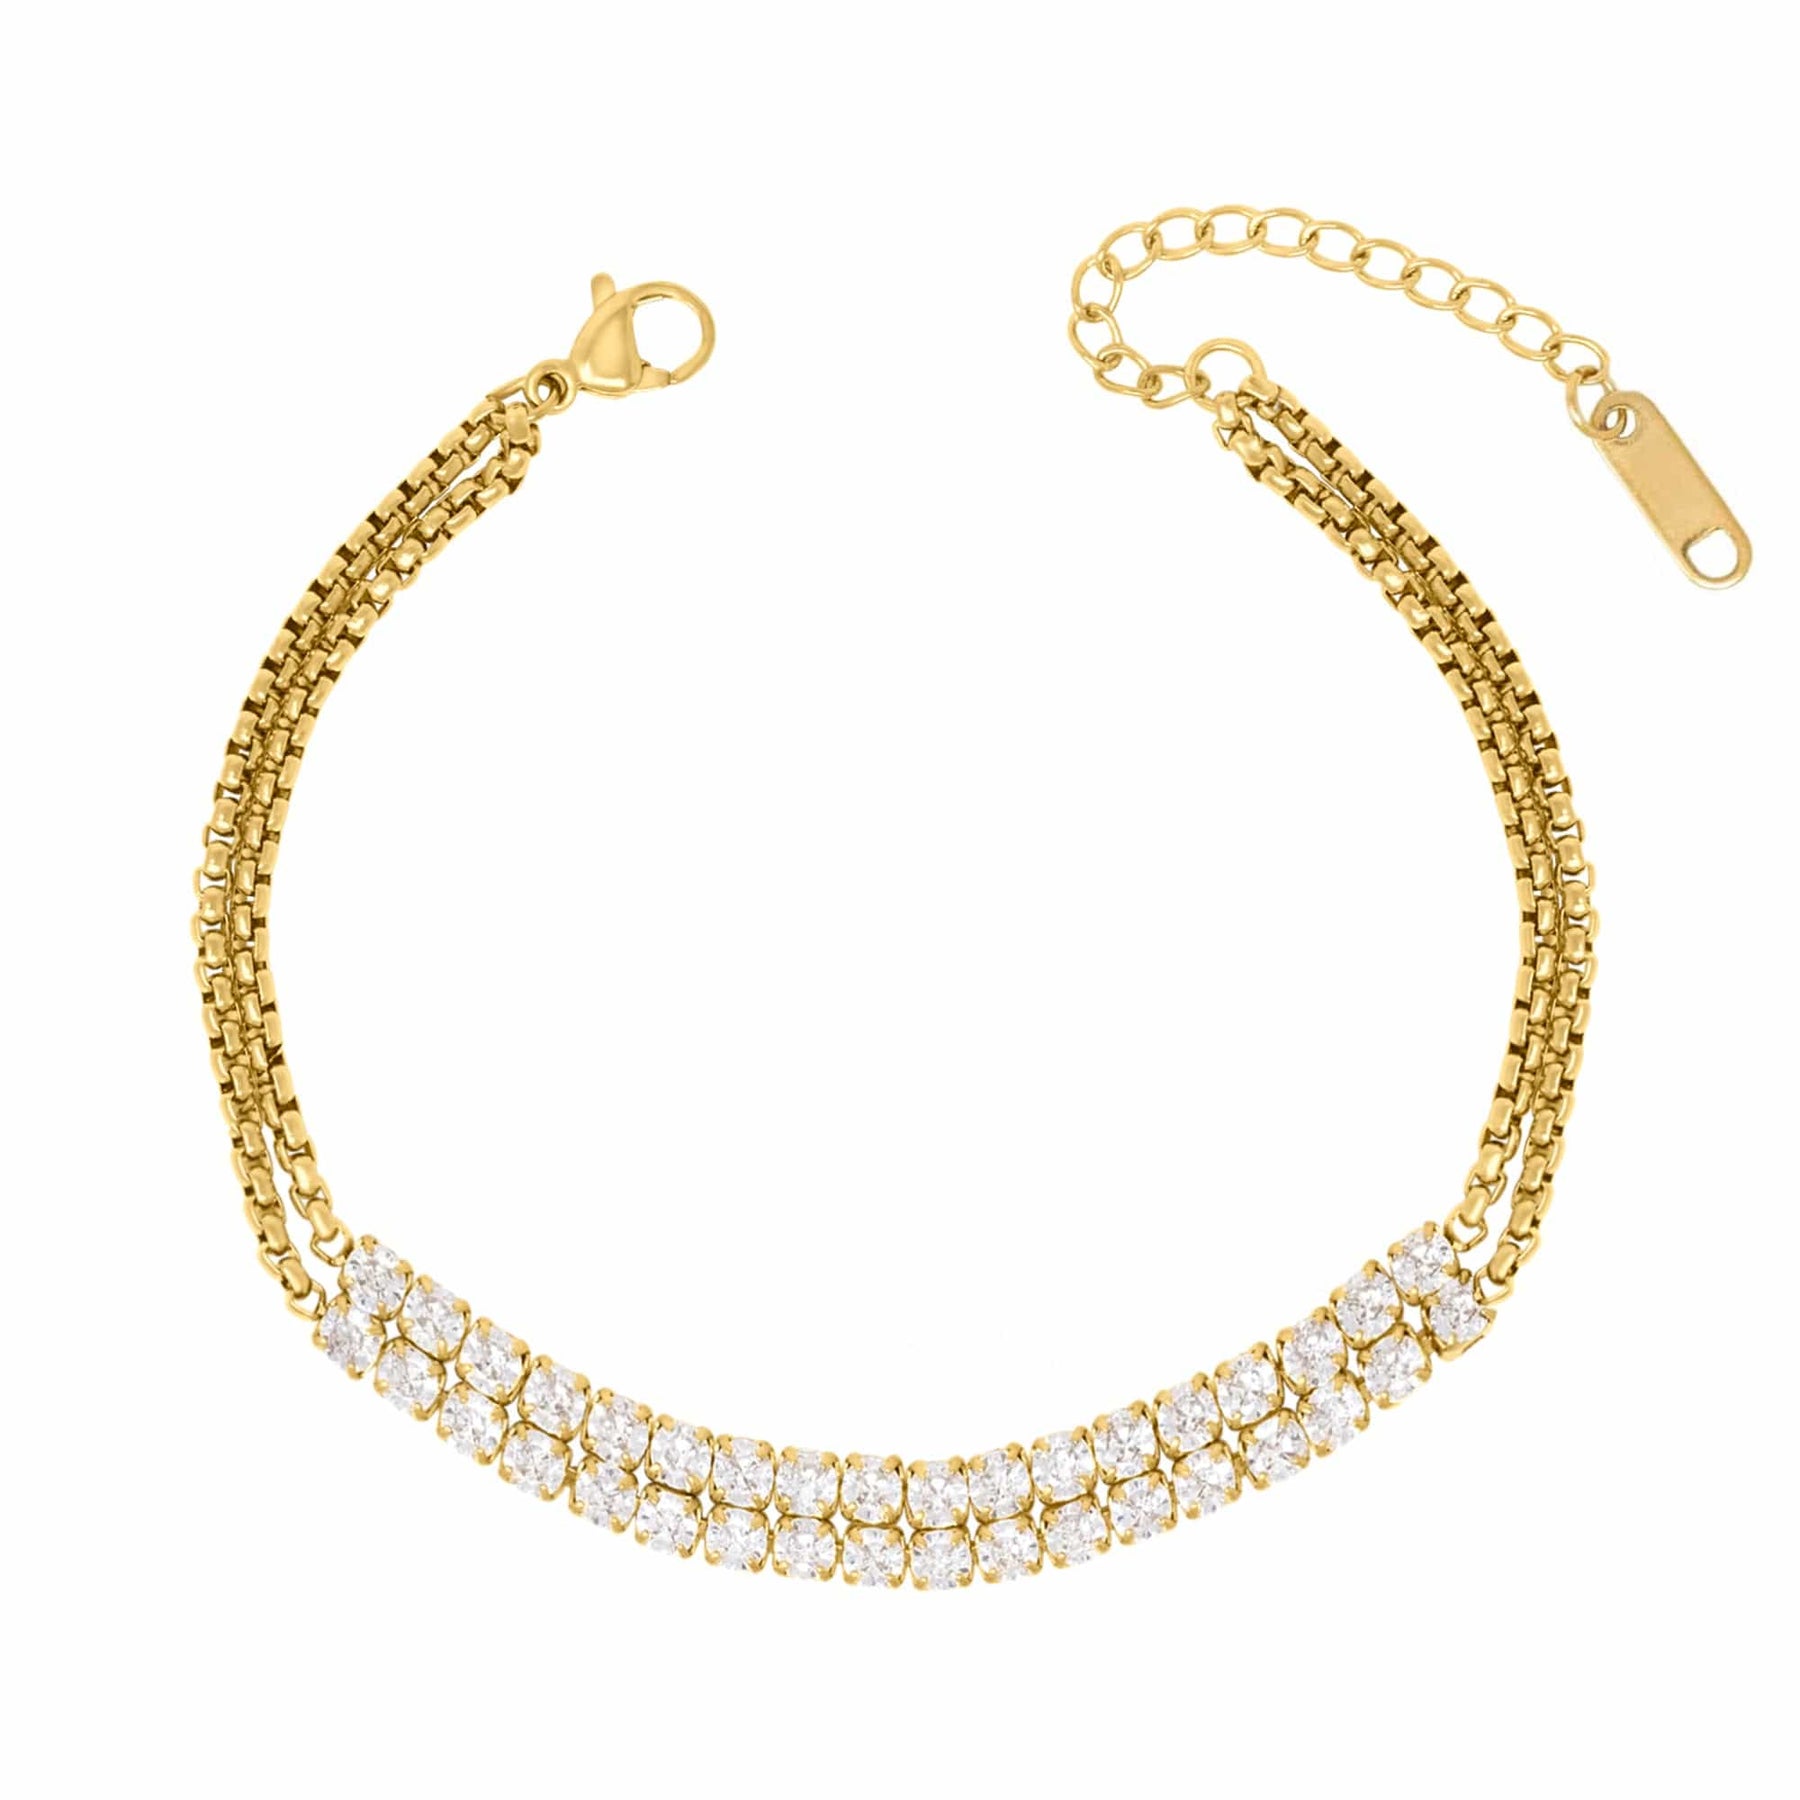 BohoMoon Stainless Steel Everglow Bracelet Gold